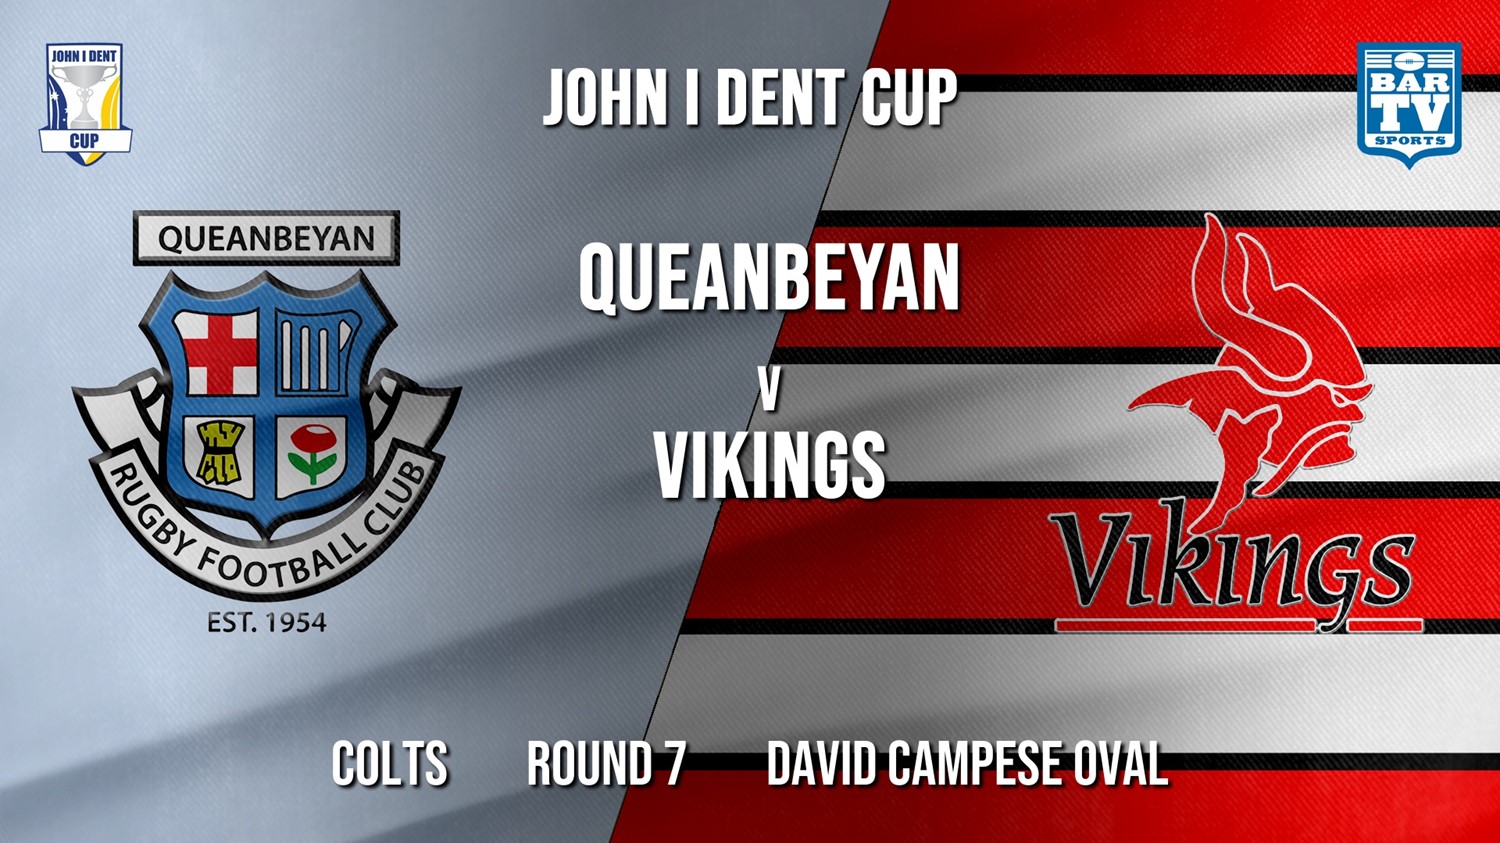 John I Dent Round 7 - Colts - Queanbeyan Whites v Tuggeranong Vikings Minigame Slate Image